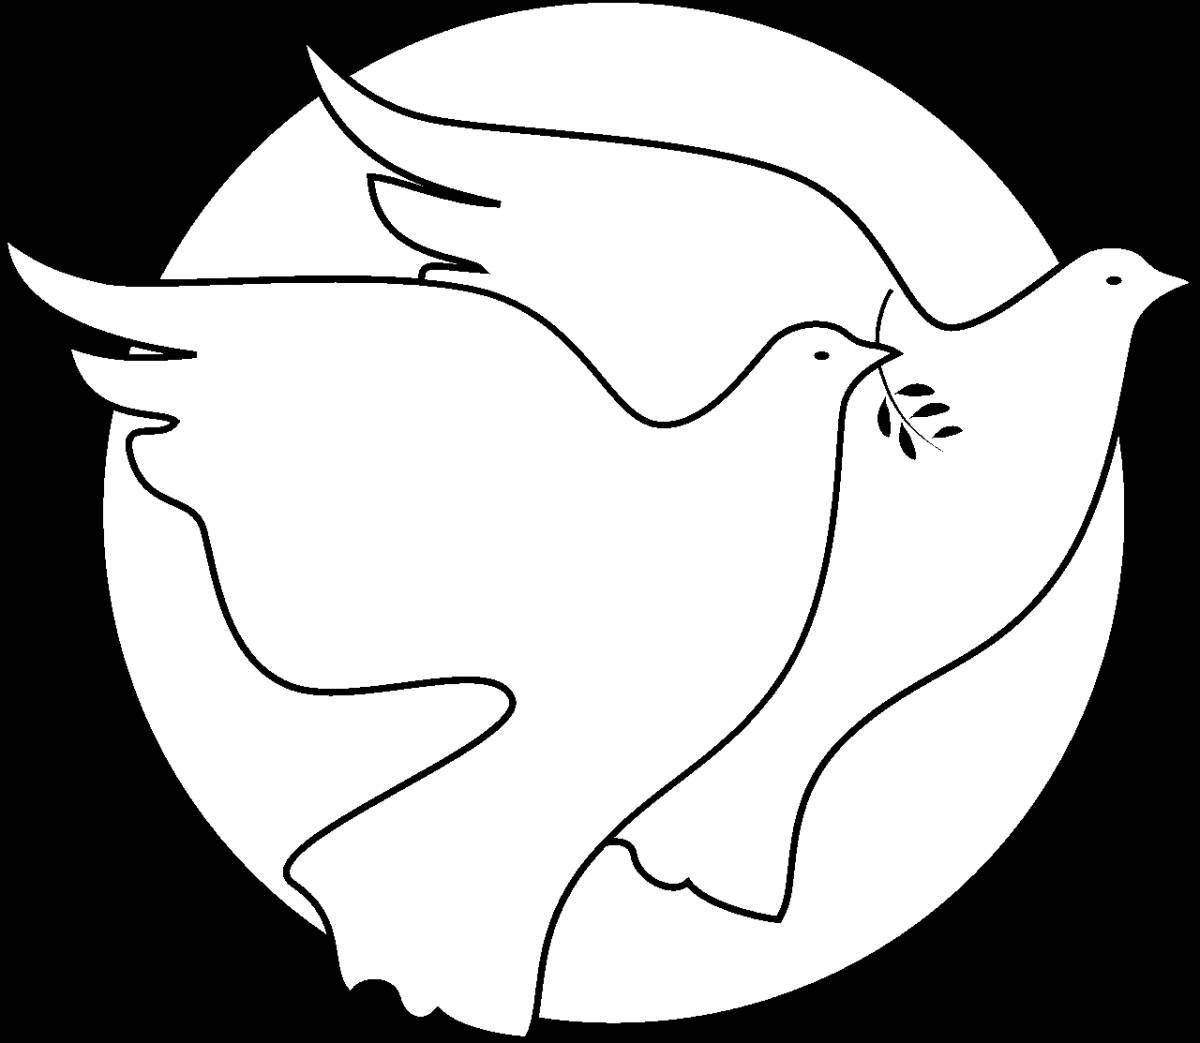 Colouring peaceful white dove